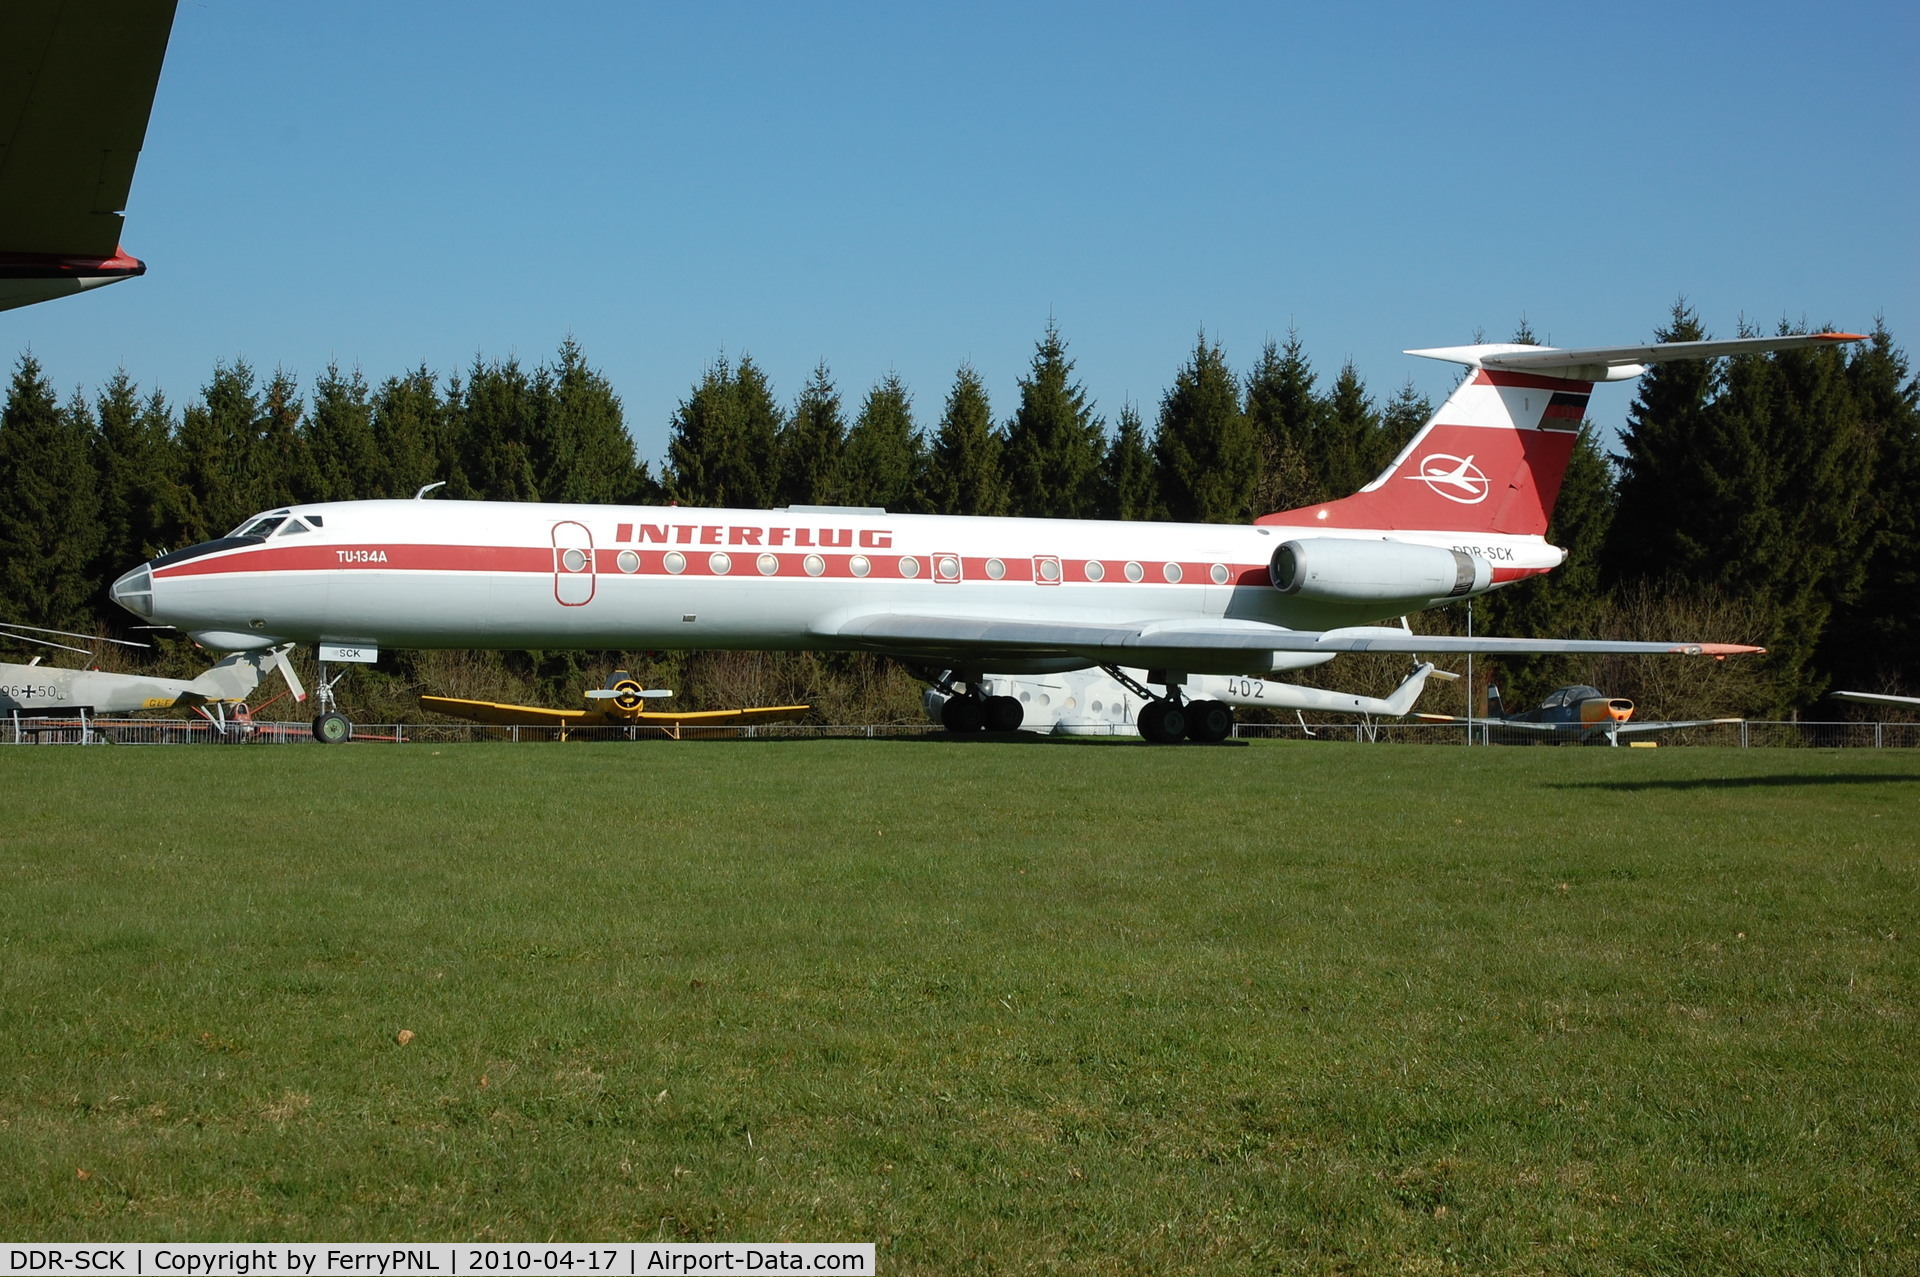 DDR-SCK, 1971 Tupolev TU-134AK C/N 1351304, Now a museum piece in Hermeskeil, Germany